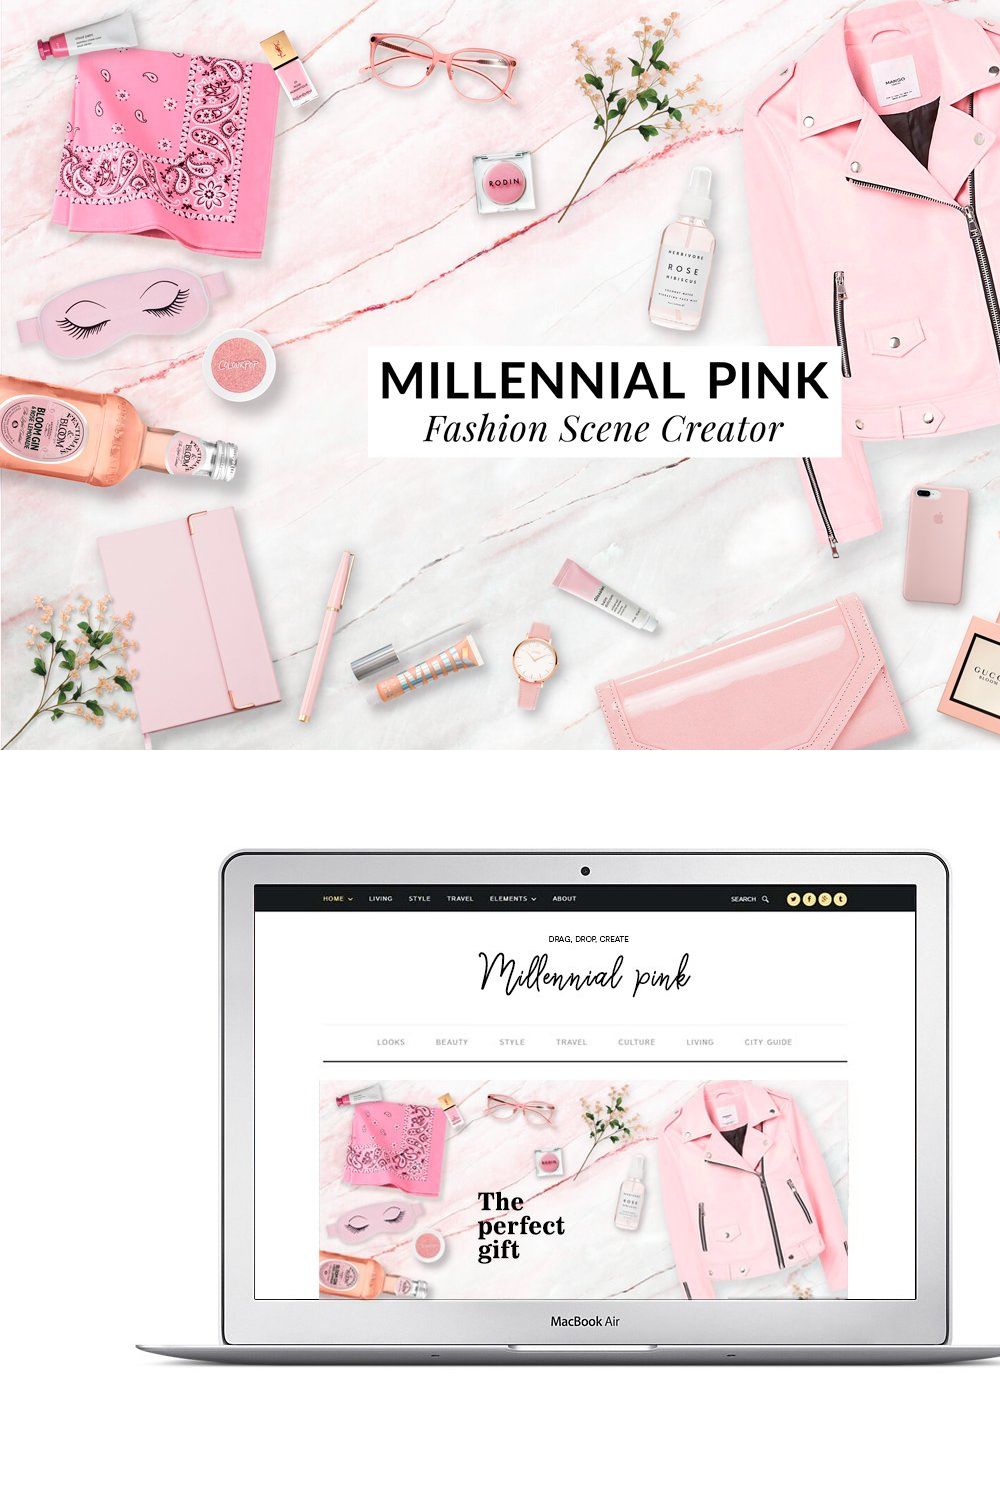 Millennial pink custom scene creator pinterest preview image.